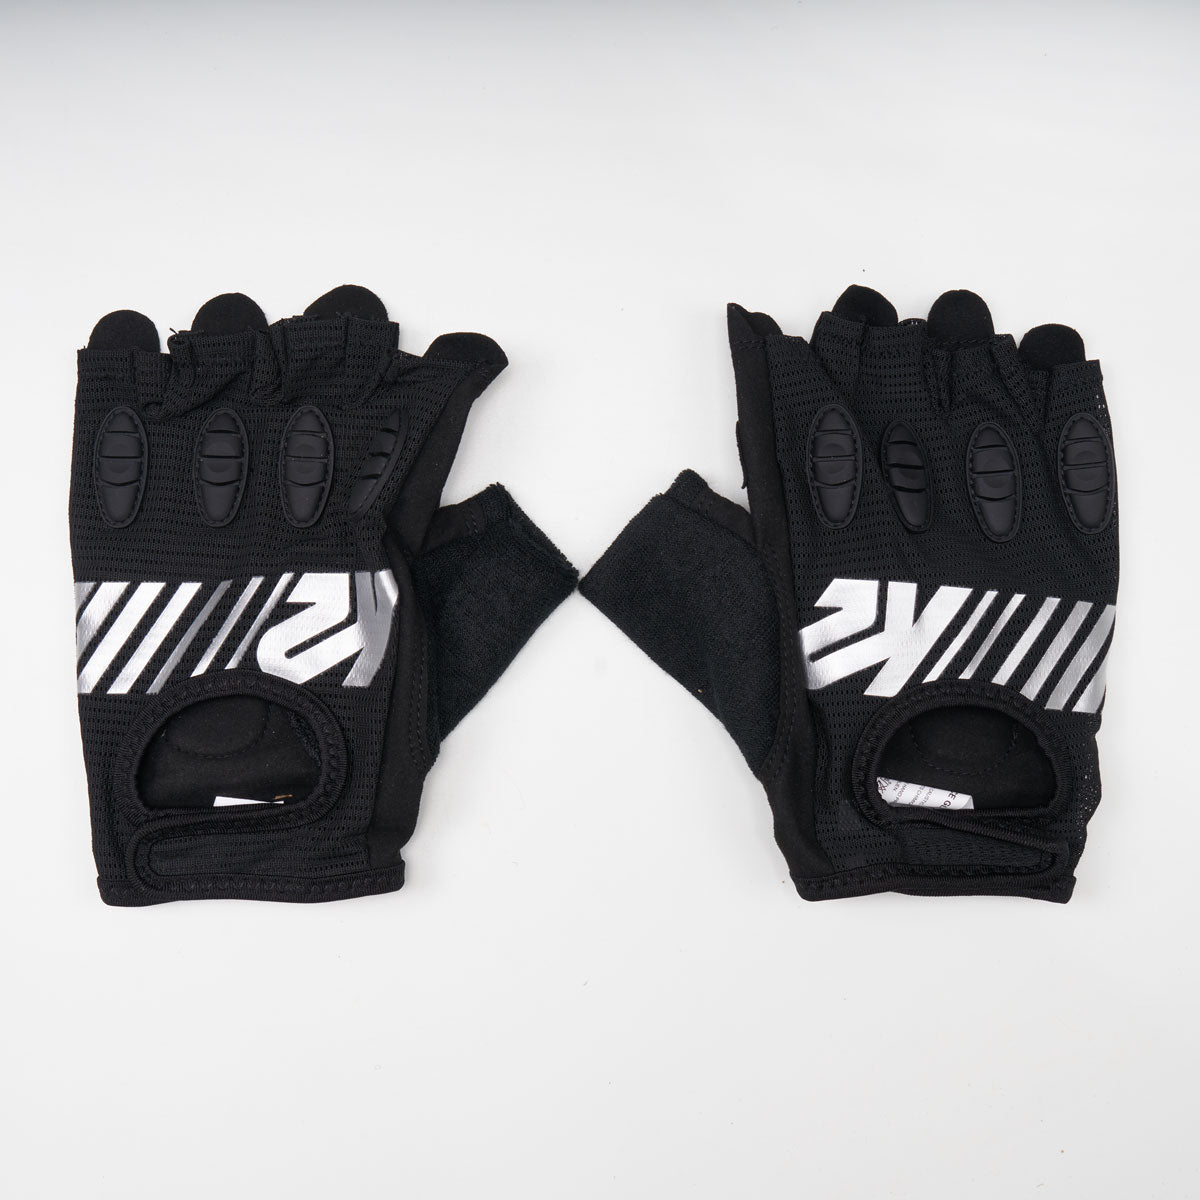 K2 Redline Race Guards - Skate Gloves